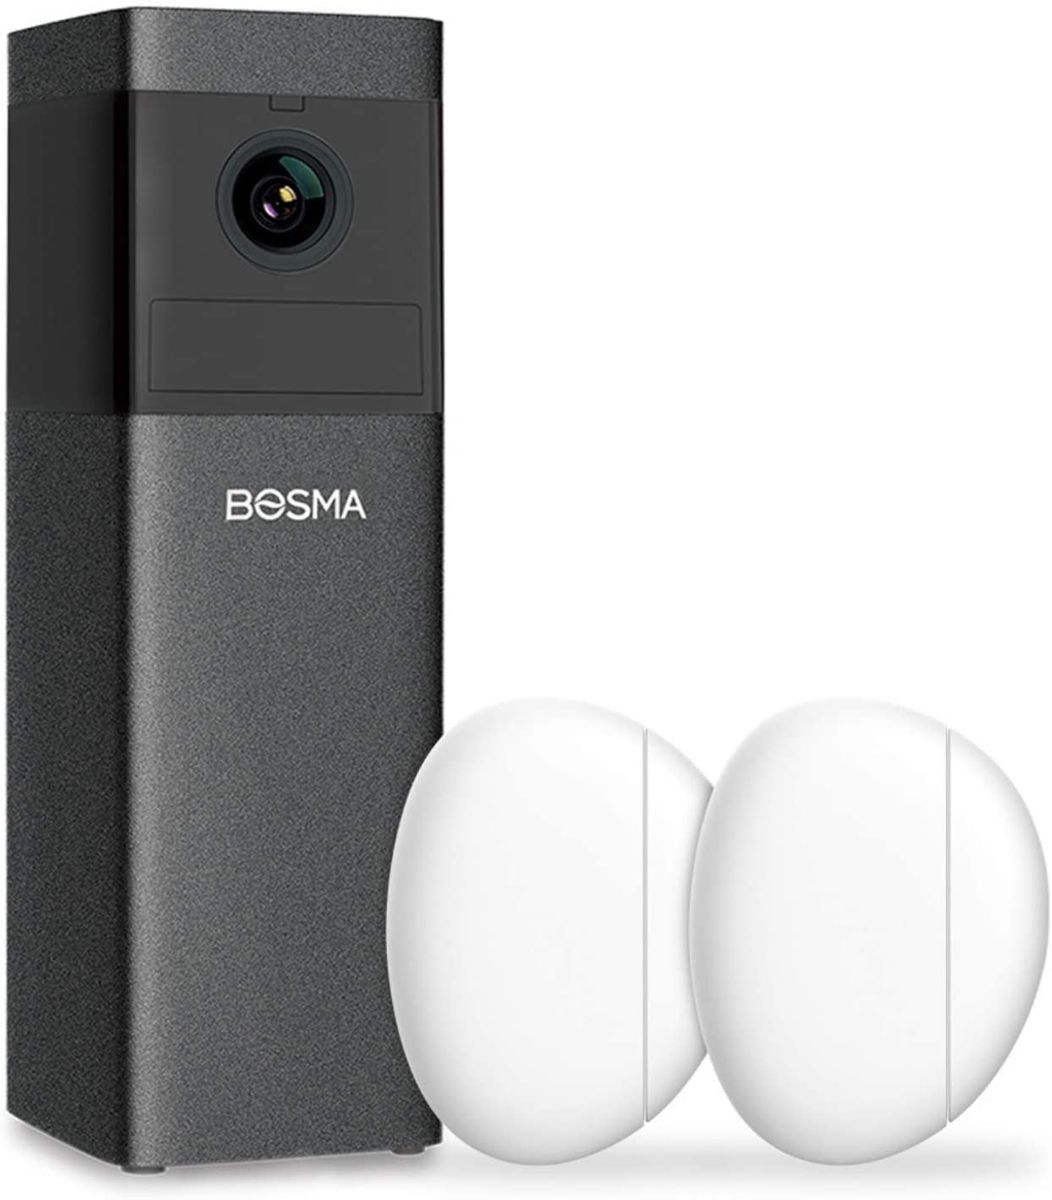 BOSMA X1 Home Security Camera 1080p HD Two Way Audio Night Vision Siren Alarm